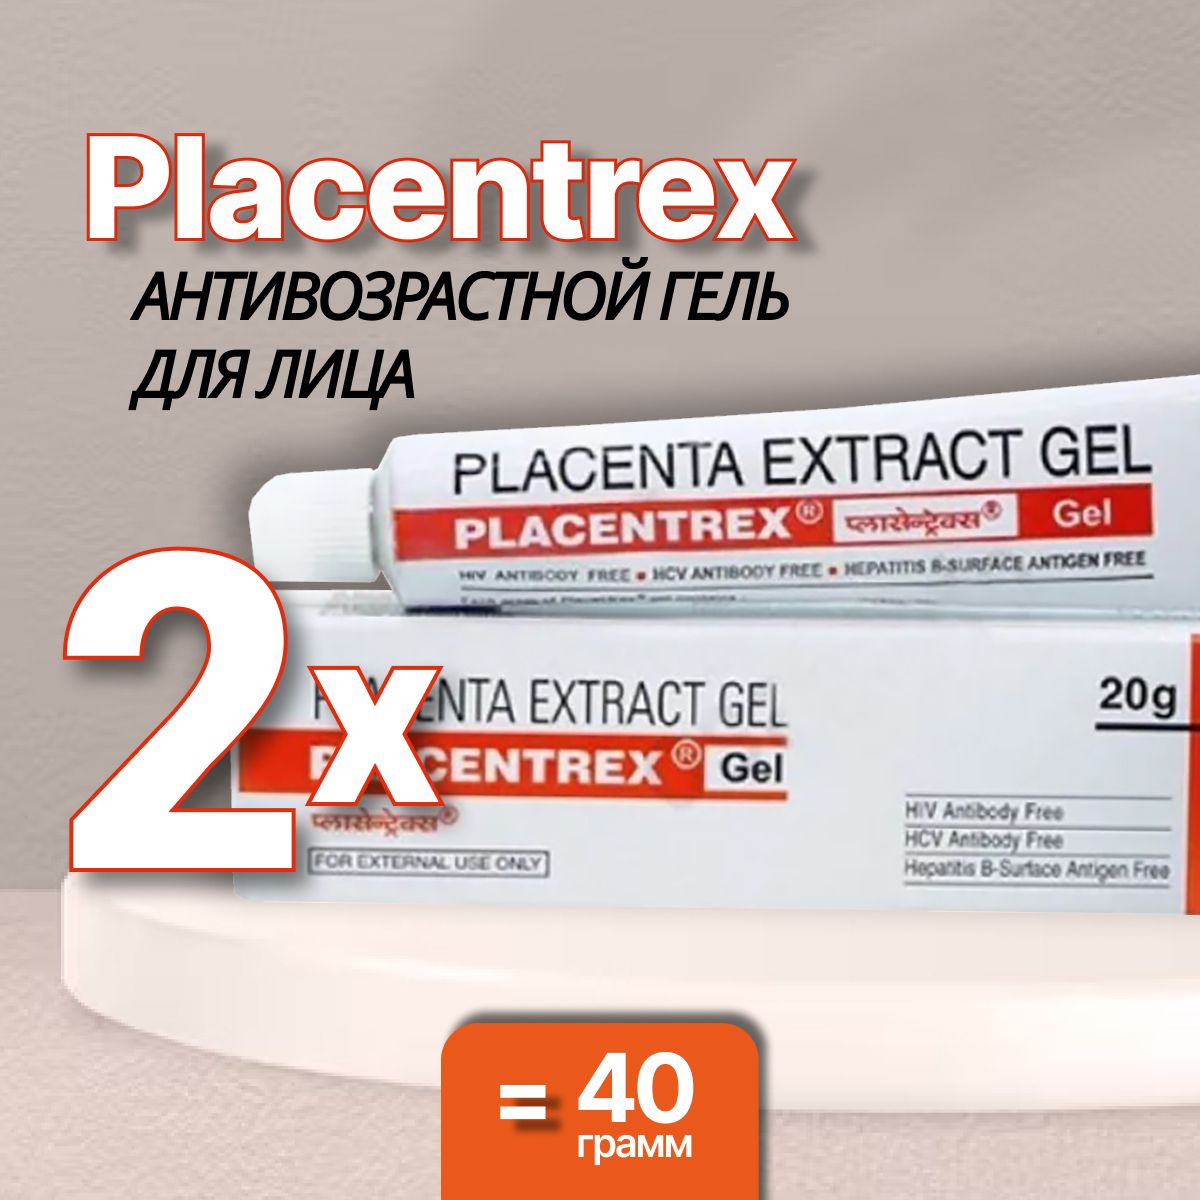 Placentrex gel. Albert David Placentrex placenta extract Gel гель Плацентрекс для лица. Плацентрекс с плацентой Placentrex extract Gel. Placentrex Cream. Плацентрекс крем инструкция.